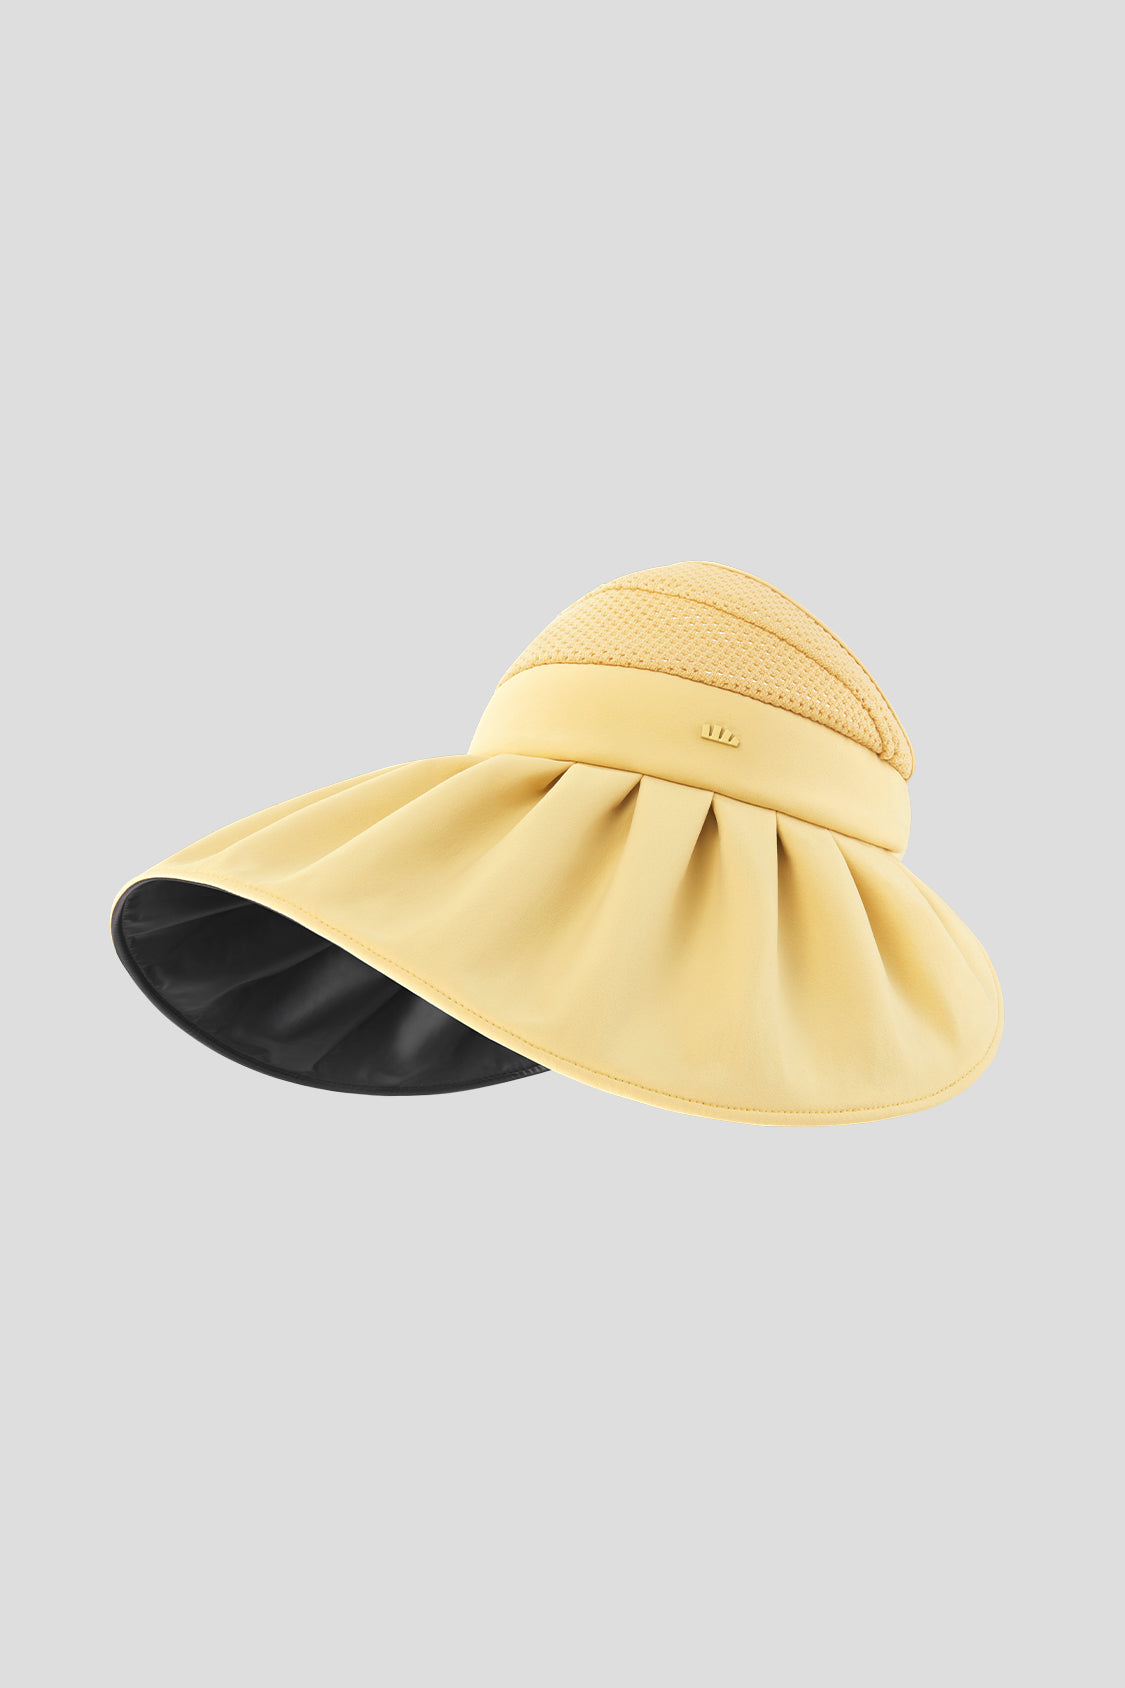 CoCopeanut New Women Summer Sun Visor Wide-brimmed Hat Beach Hat Adjustable  UV Protection Female Cap Packable Bucket Hat Women Panamas 